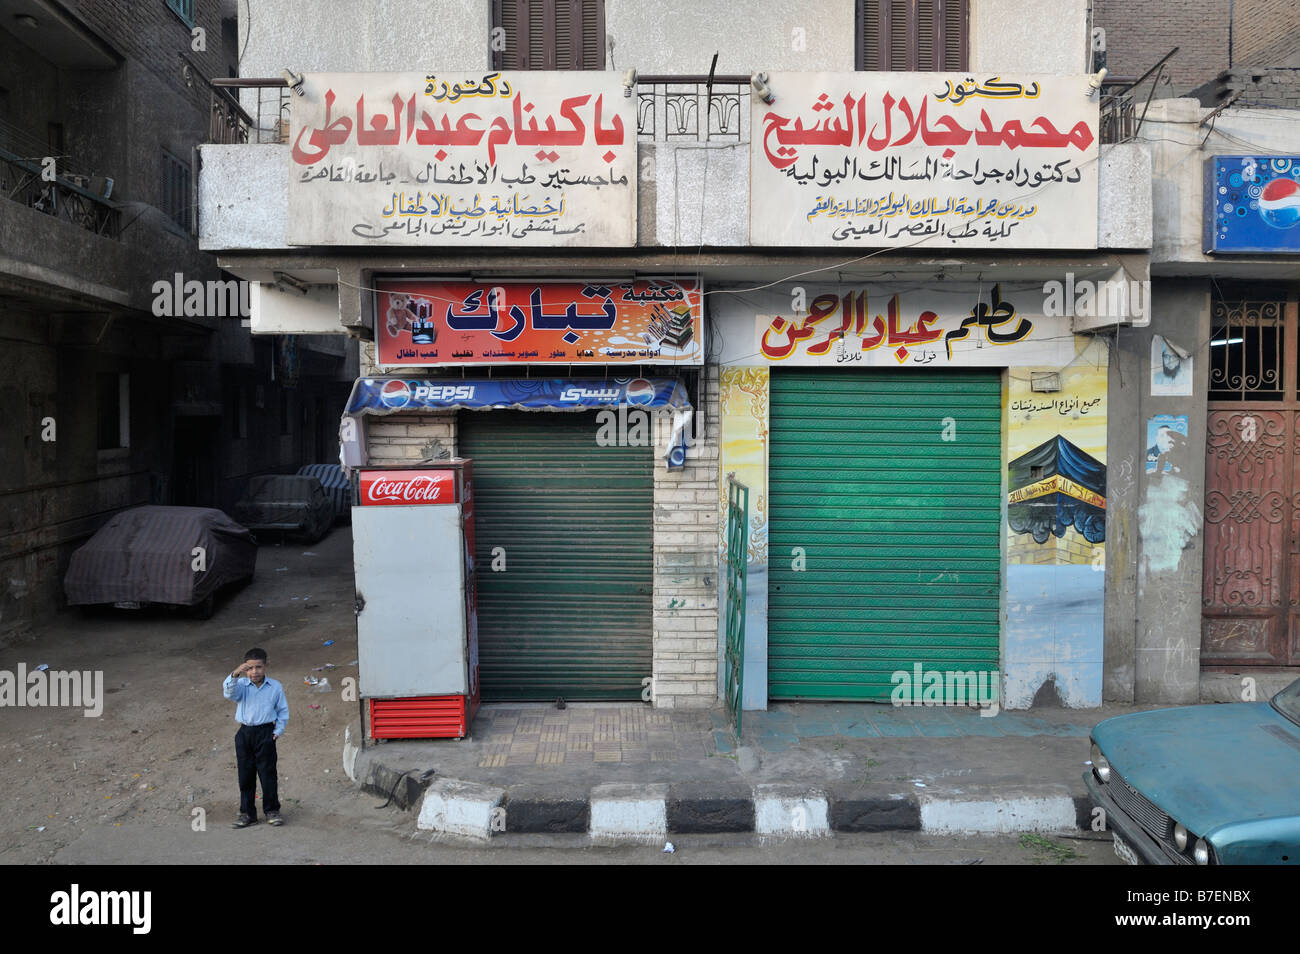 Street Scene, Cairo, Egypt 081111 31850 Stock Photo